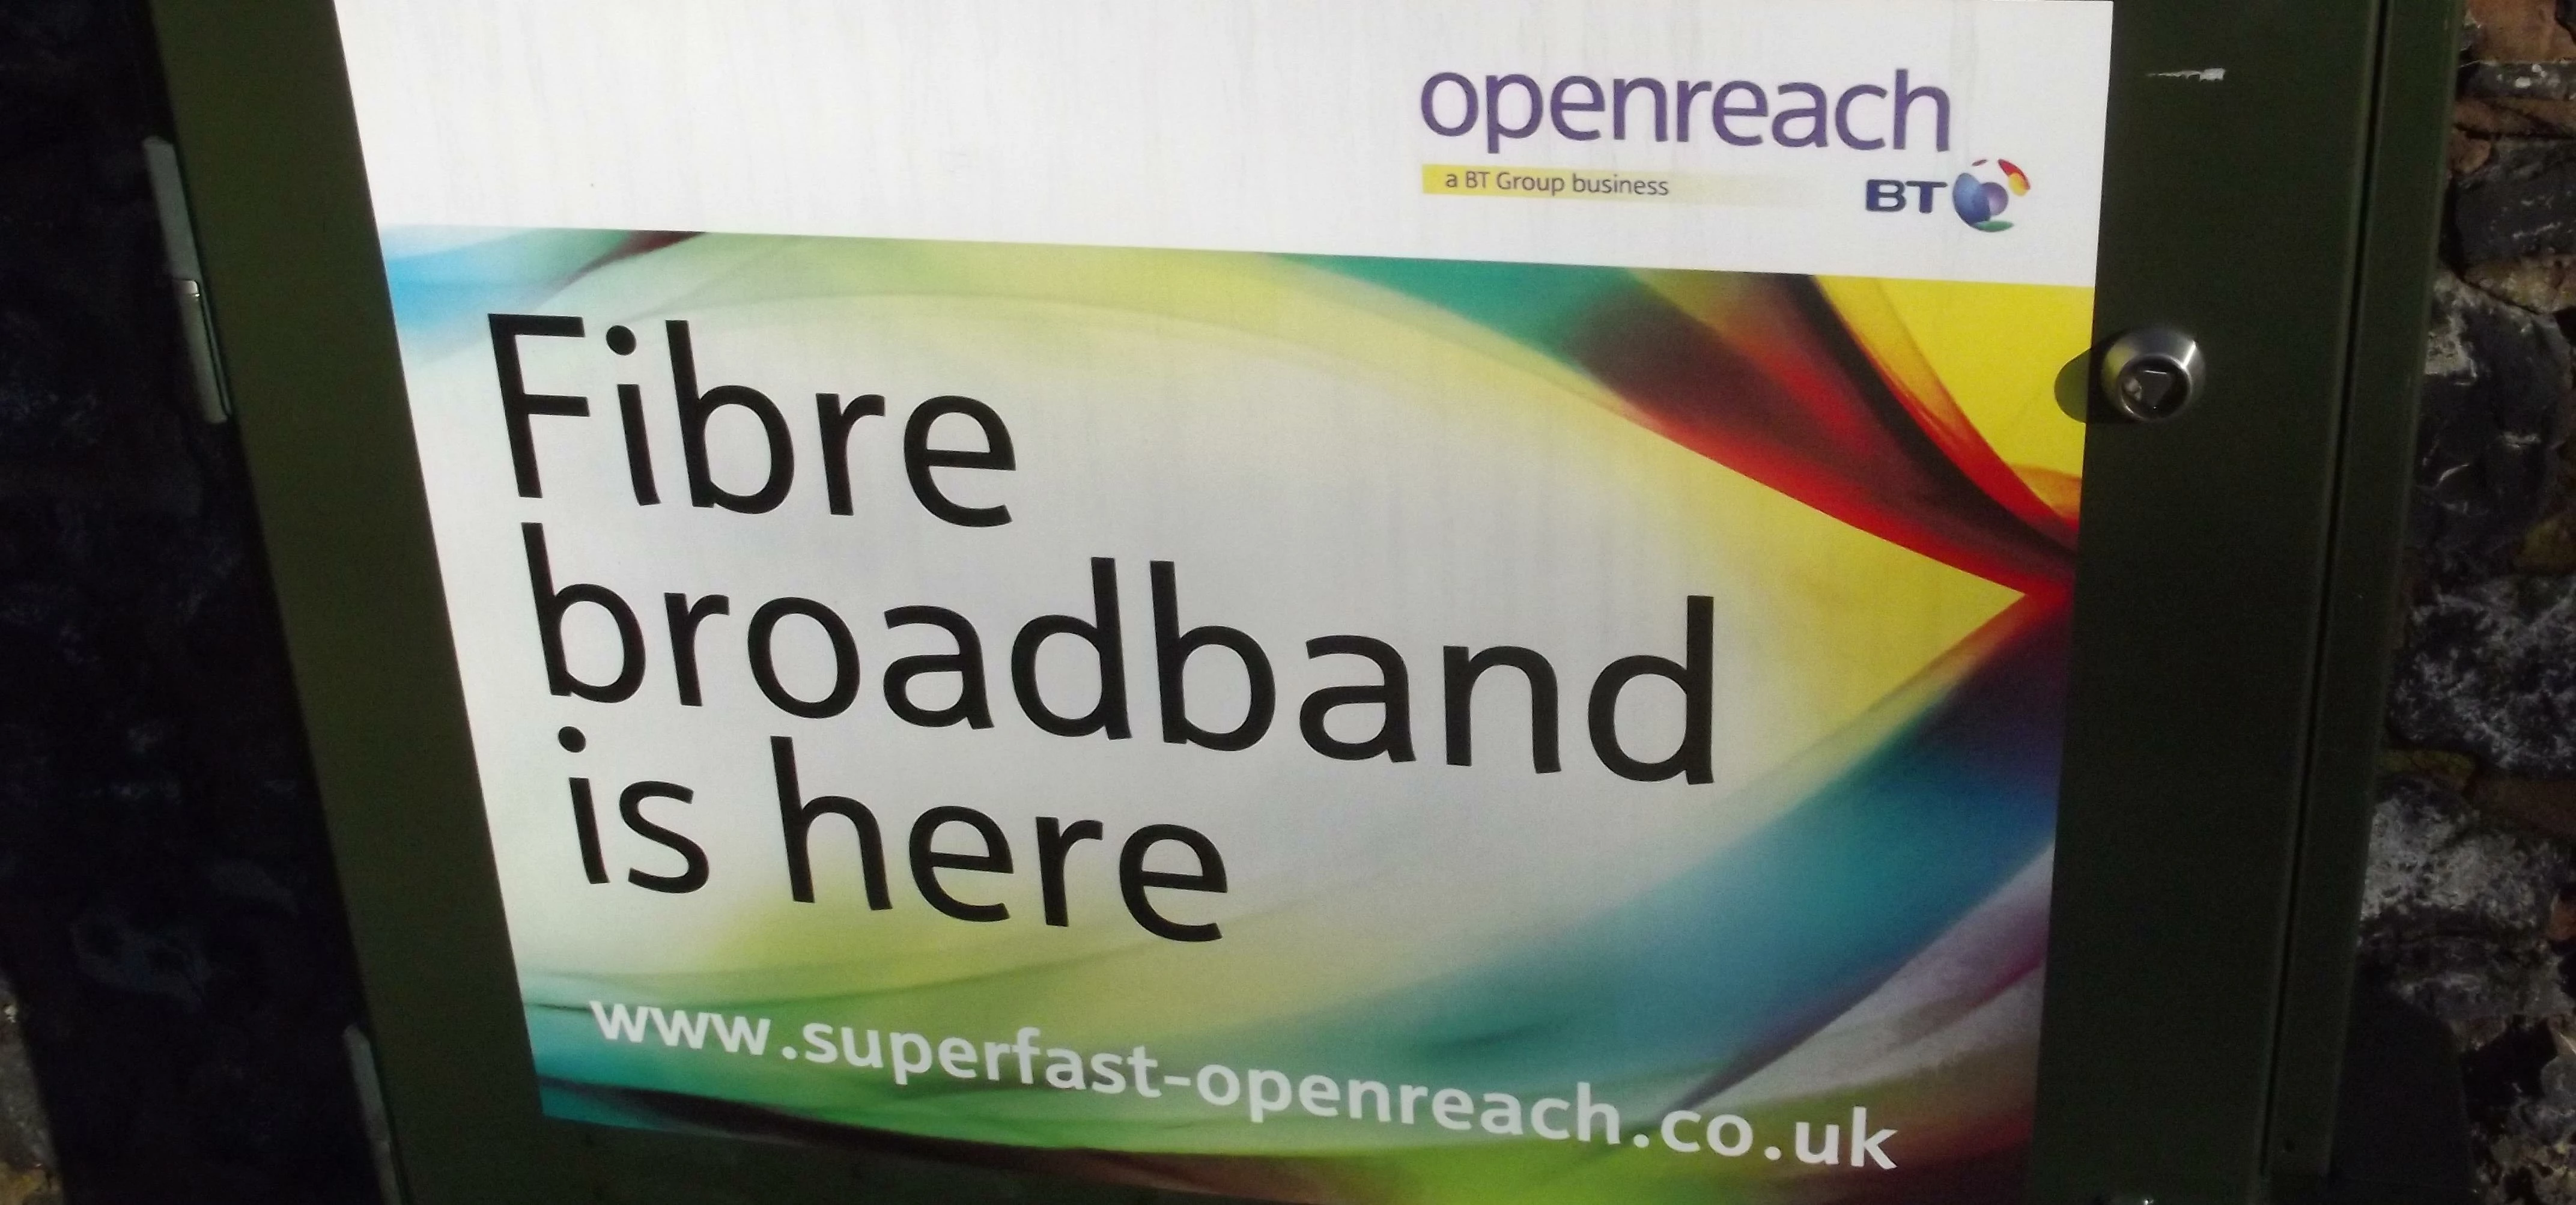 Fibre broadband is here - Ampton Road, Edgbaston